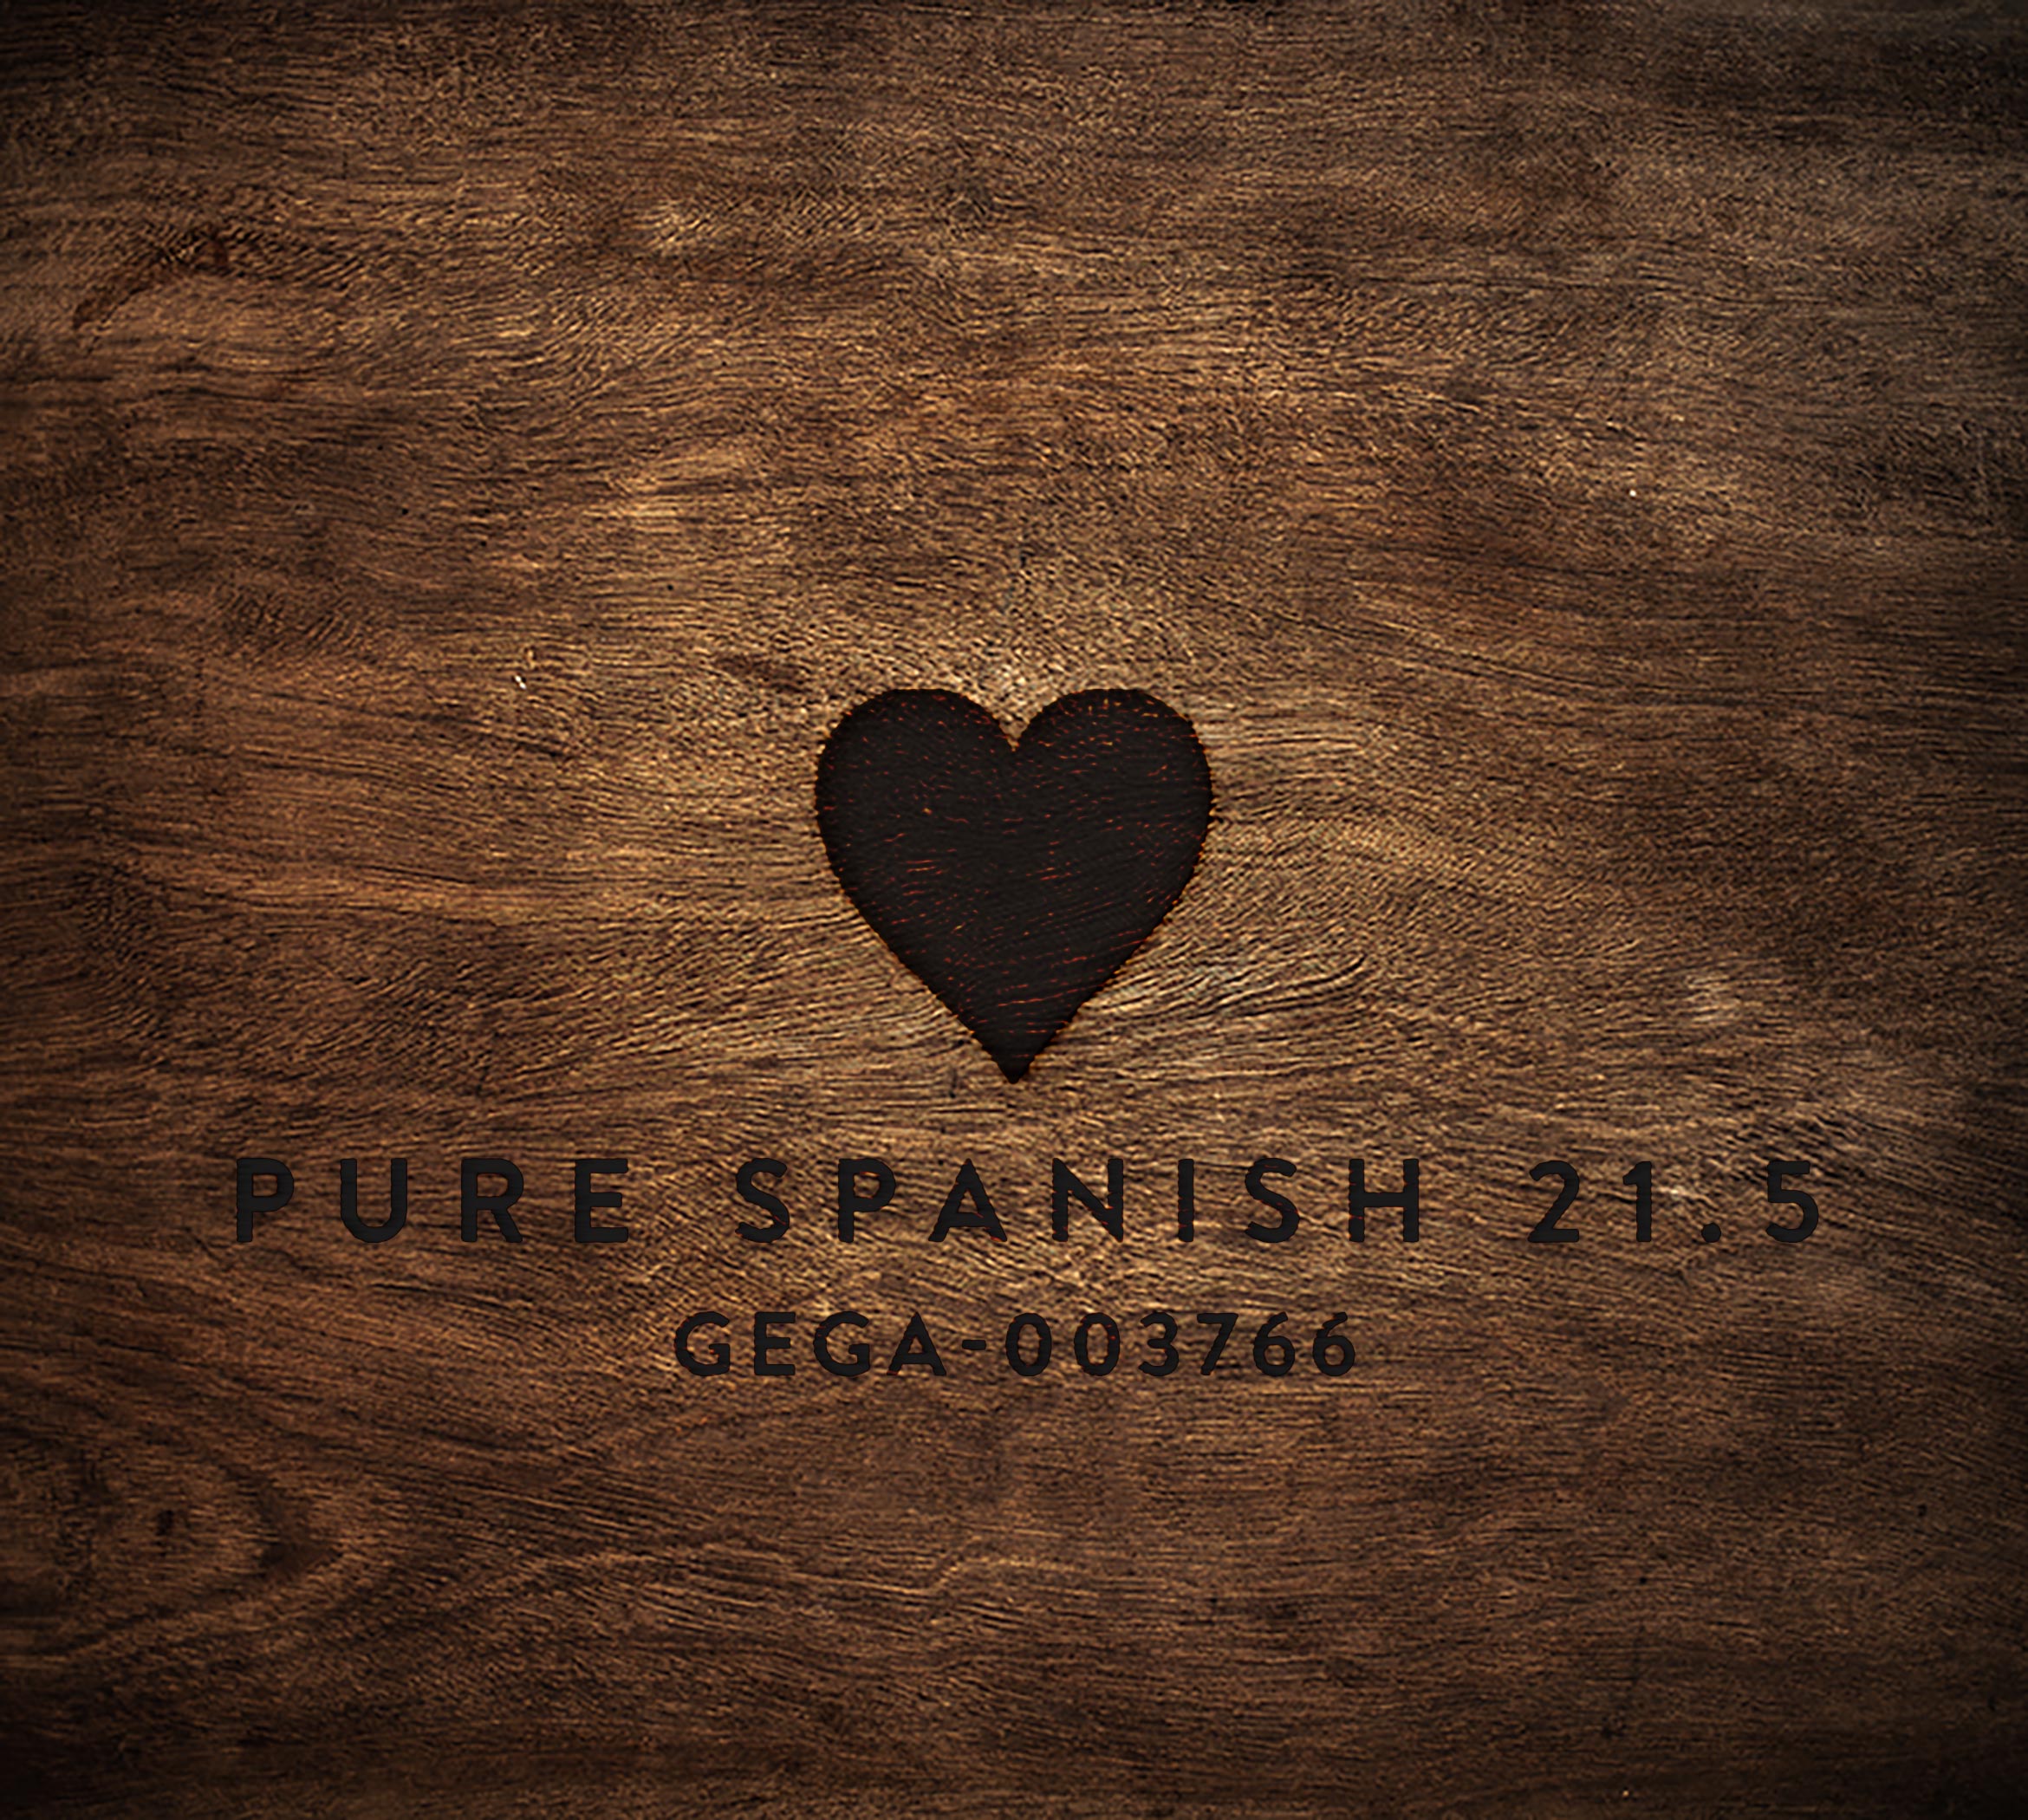 Pure Spanish 21.5 GEGA-003766 wood block